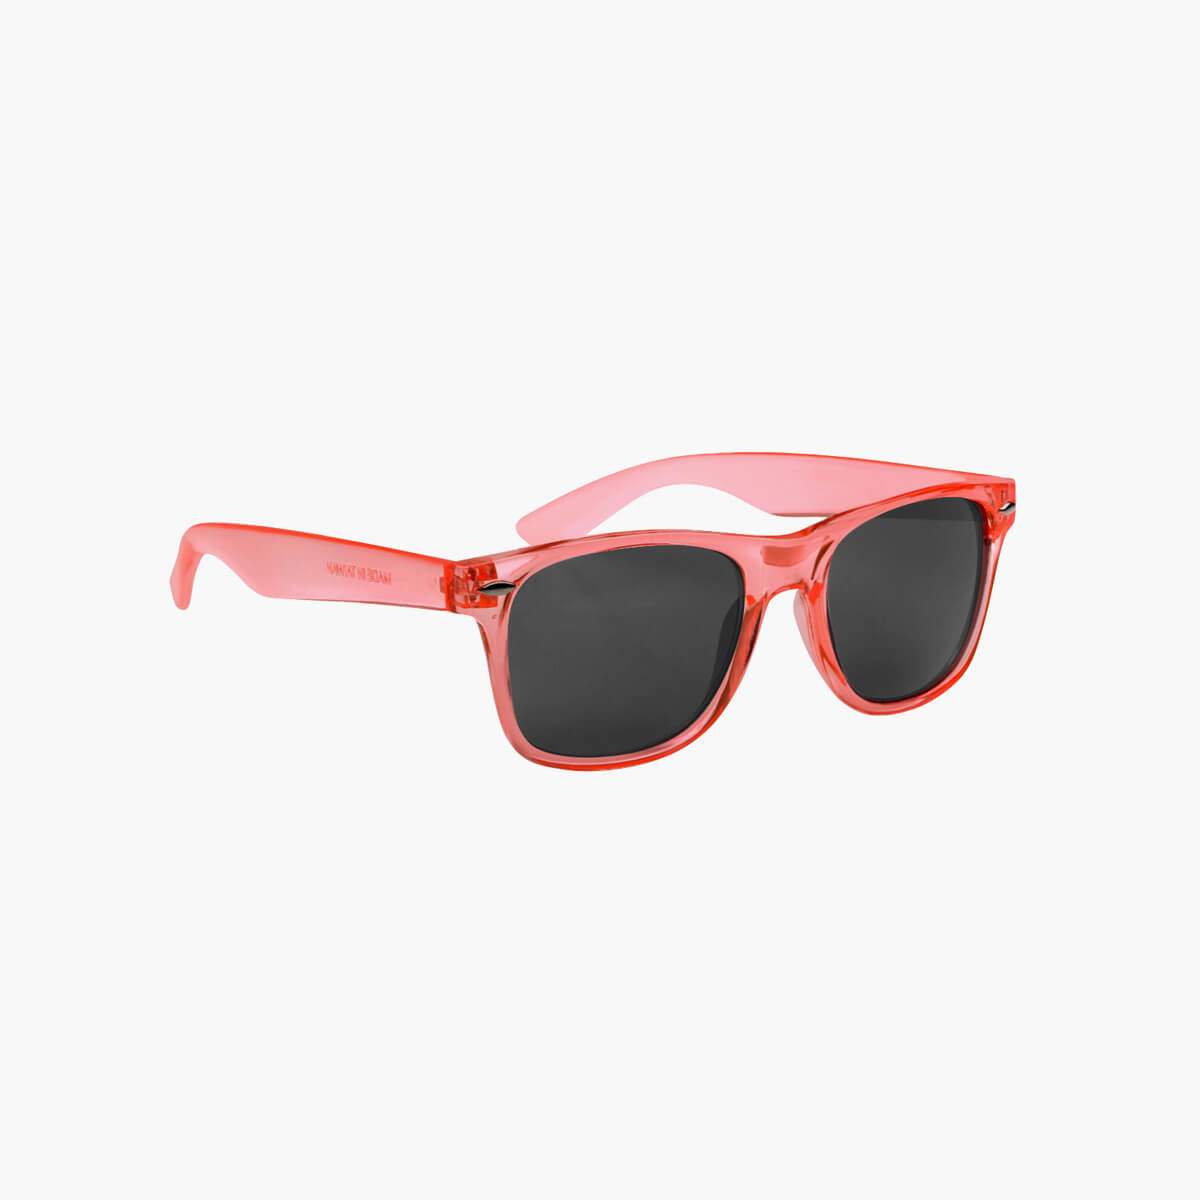 The Essentials Malibu Sunglasses